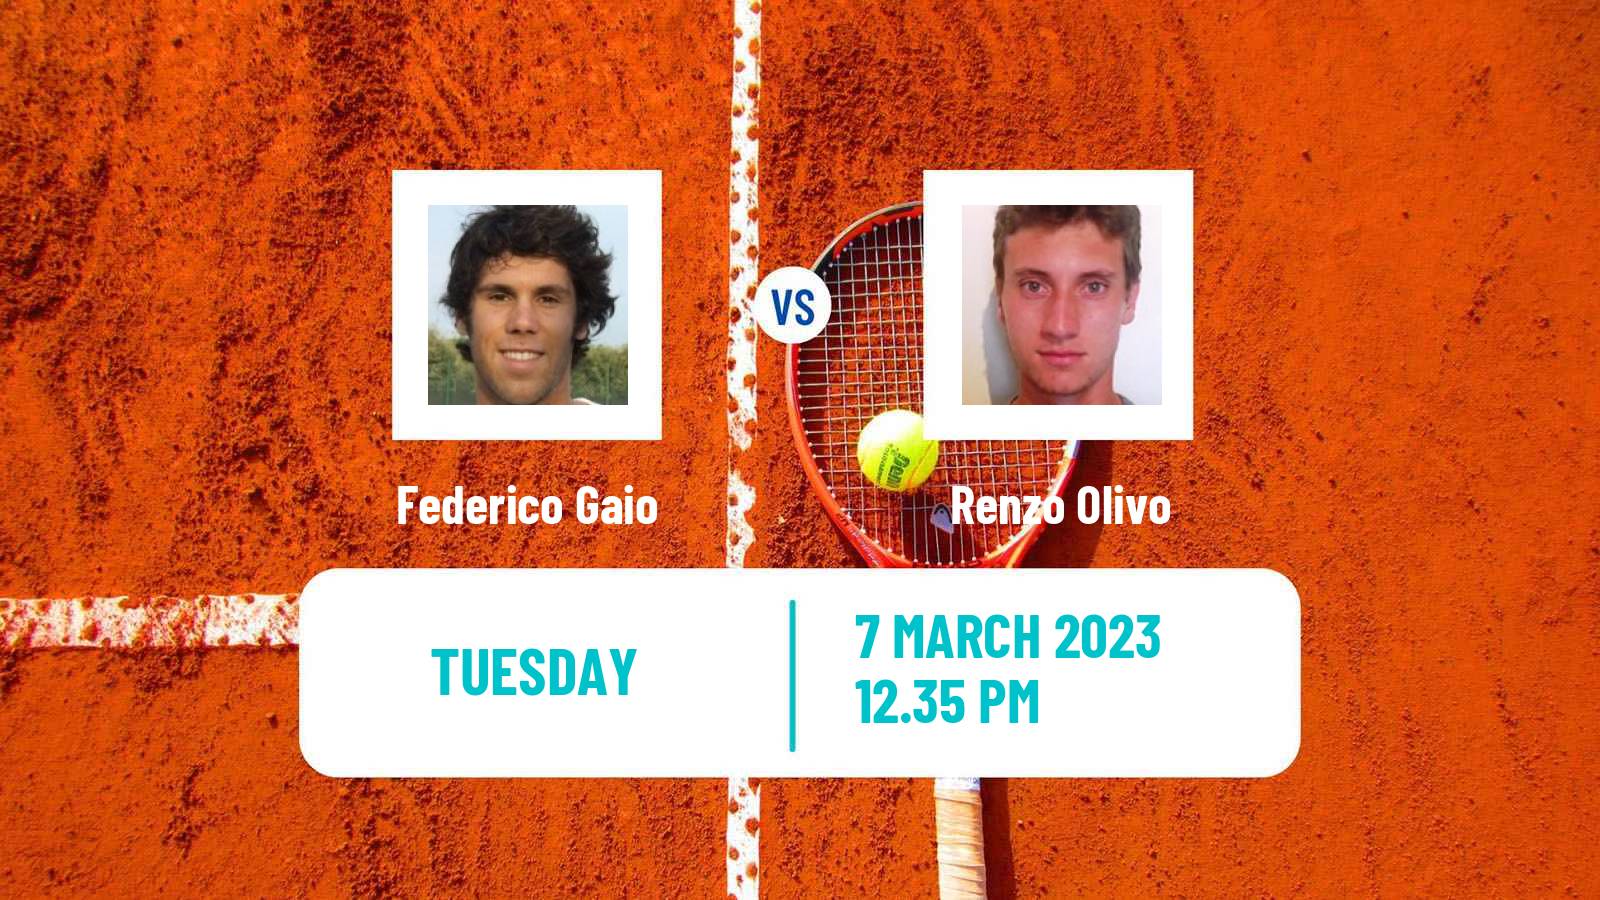 Tennis ATP Challenger Federico Gaio - Renzo Olivo